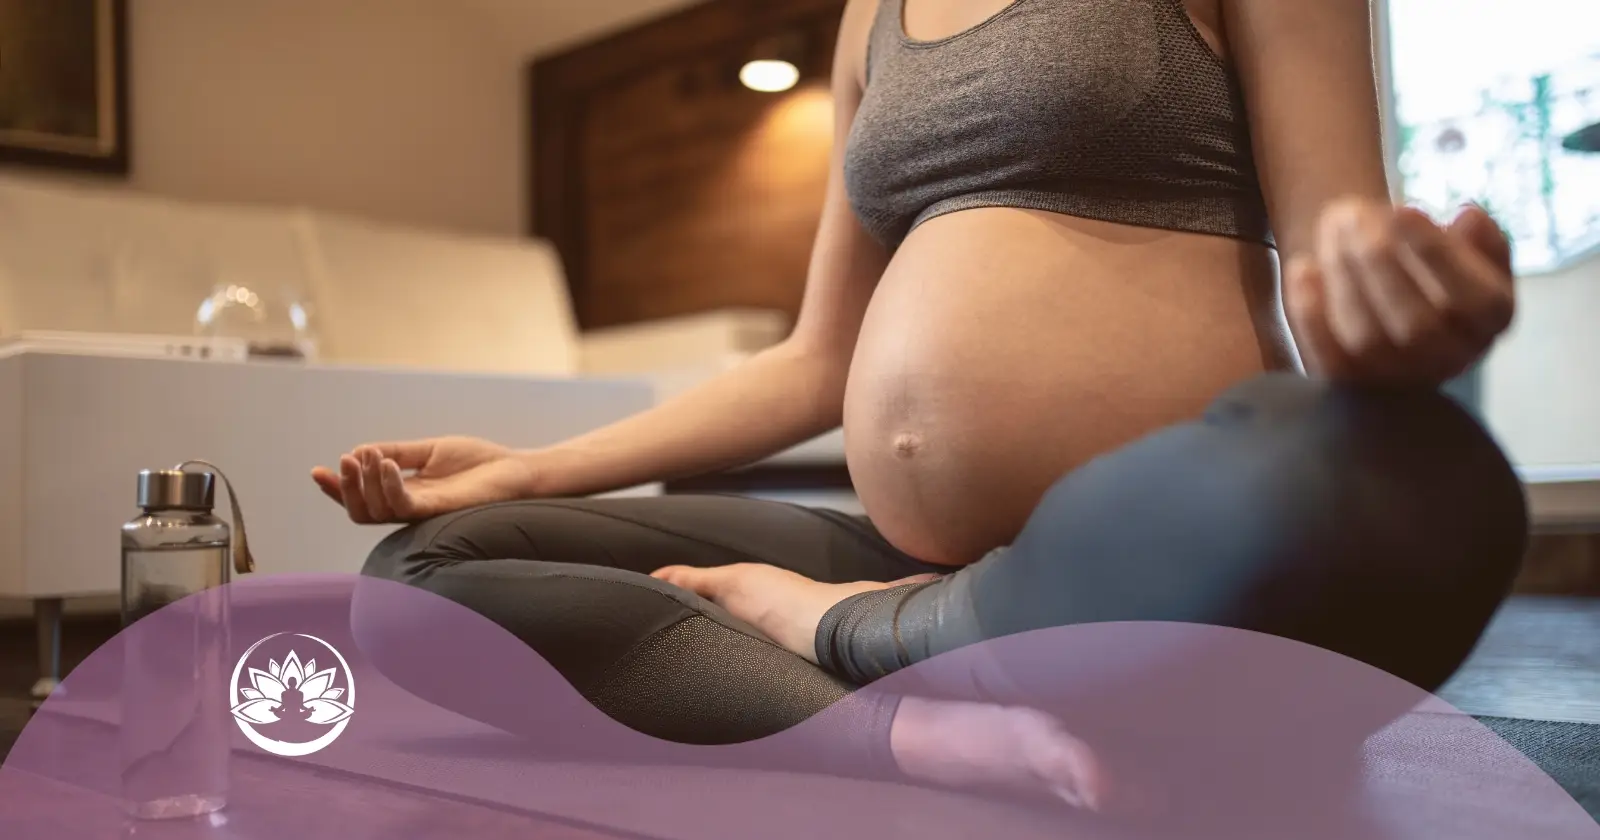 yoga in gravidanza